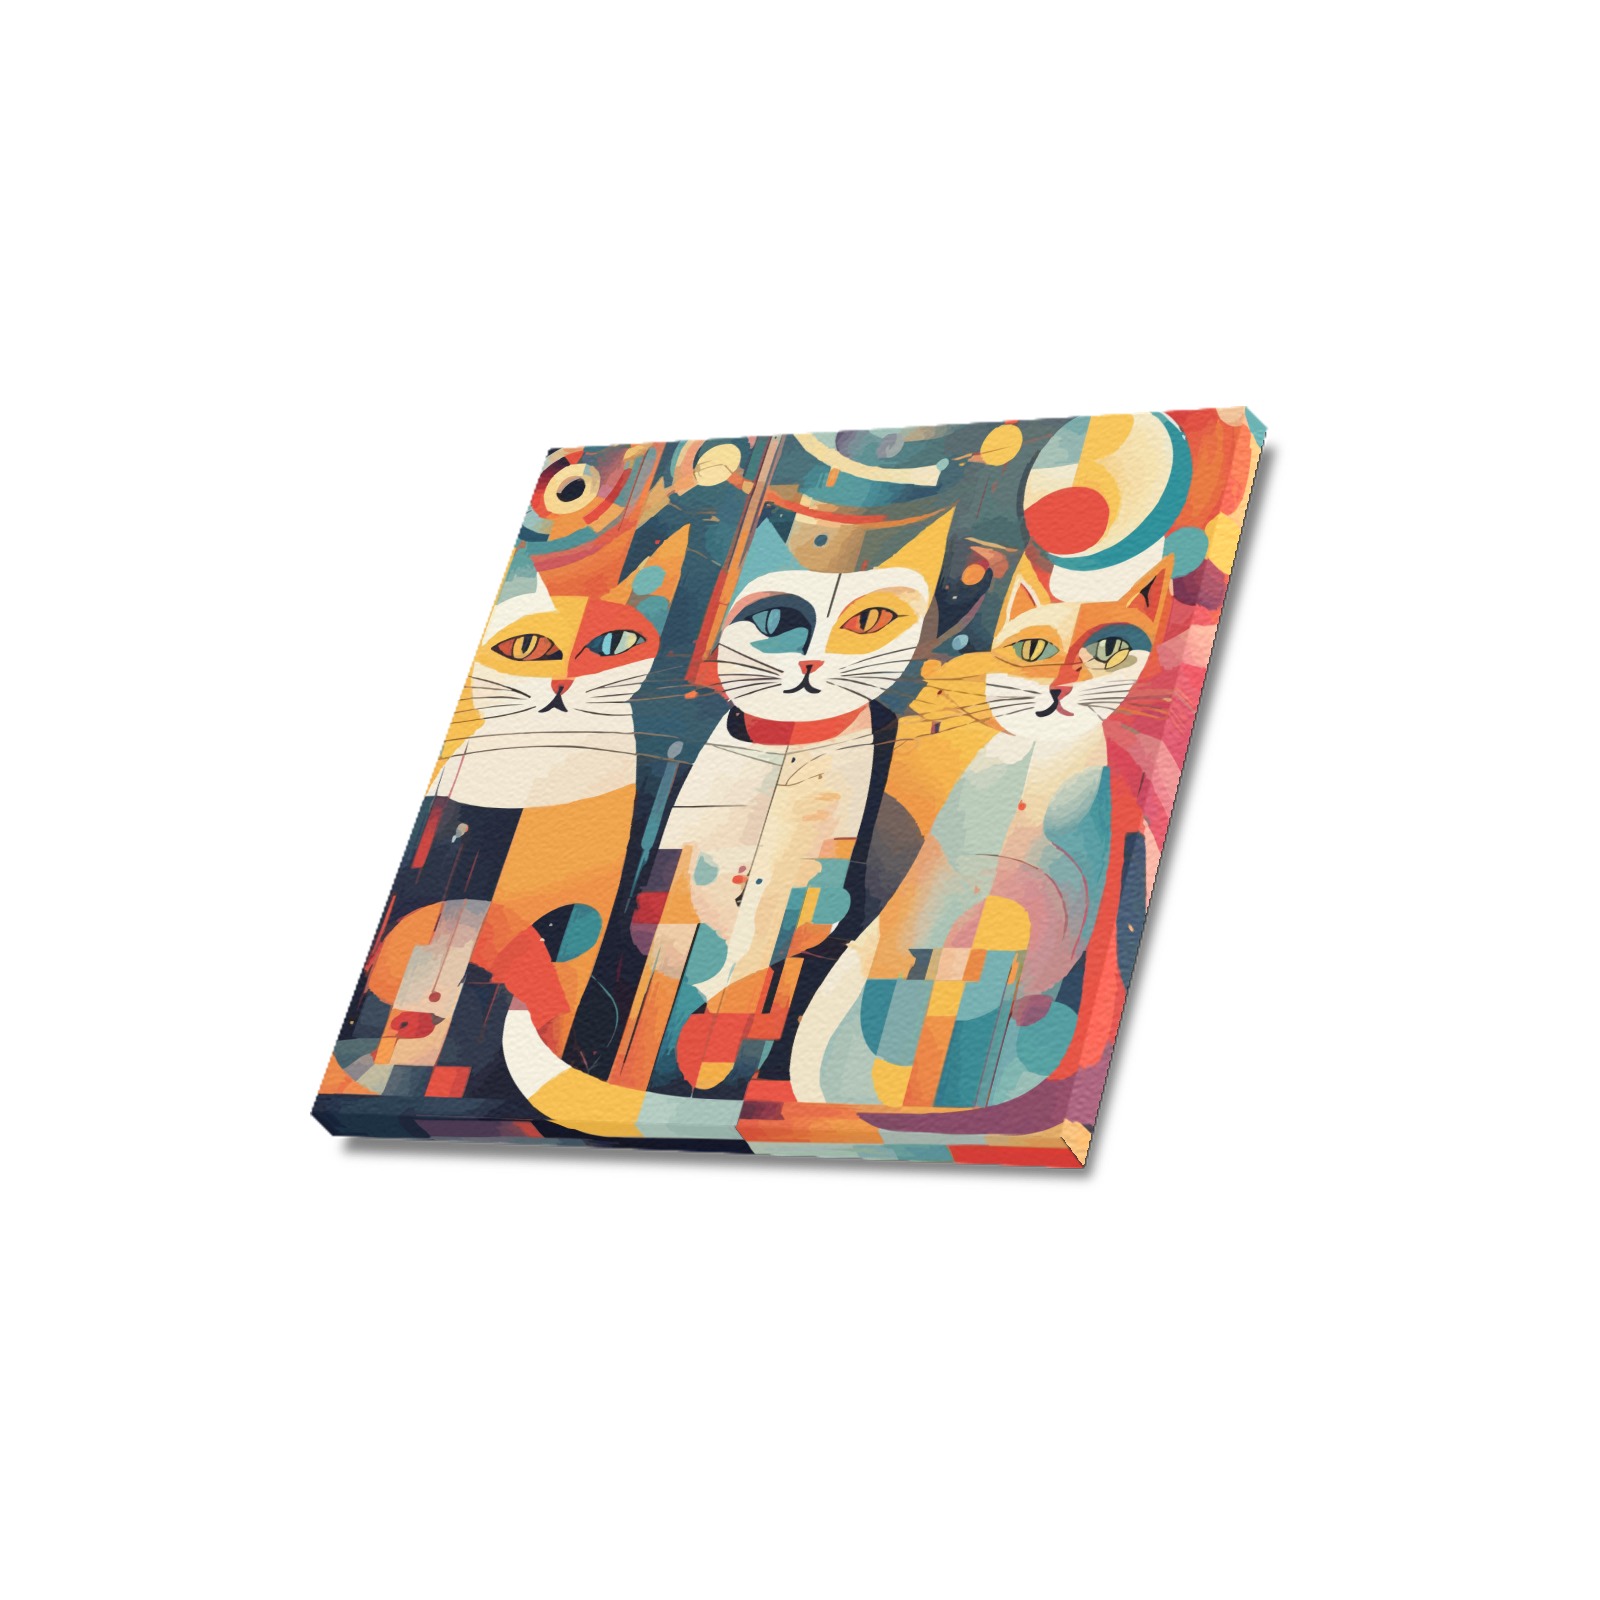 Three cats fantasy abstract art. Festive colors. Upgraded Canvas Print 16"x16"